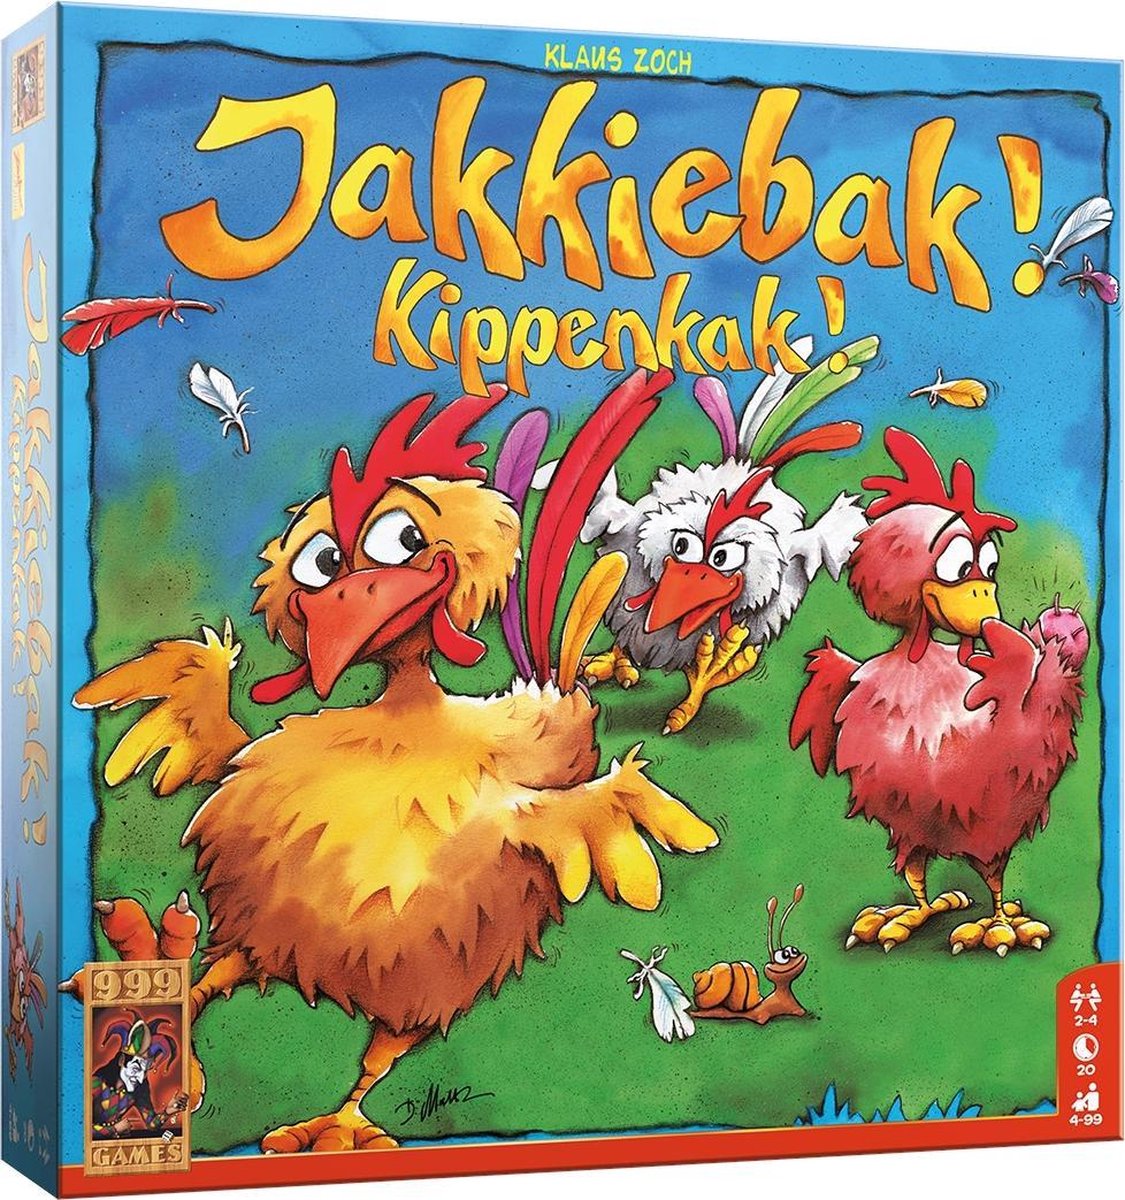 Jakkiebak! Kippenkak! Bordspel | Games | bol.com